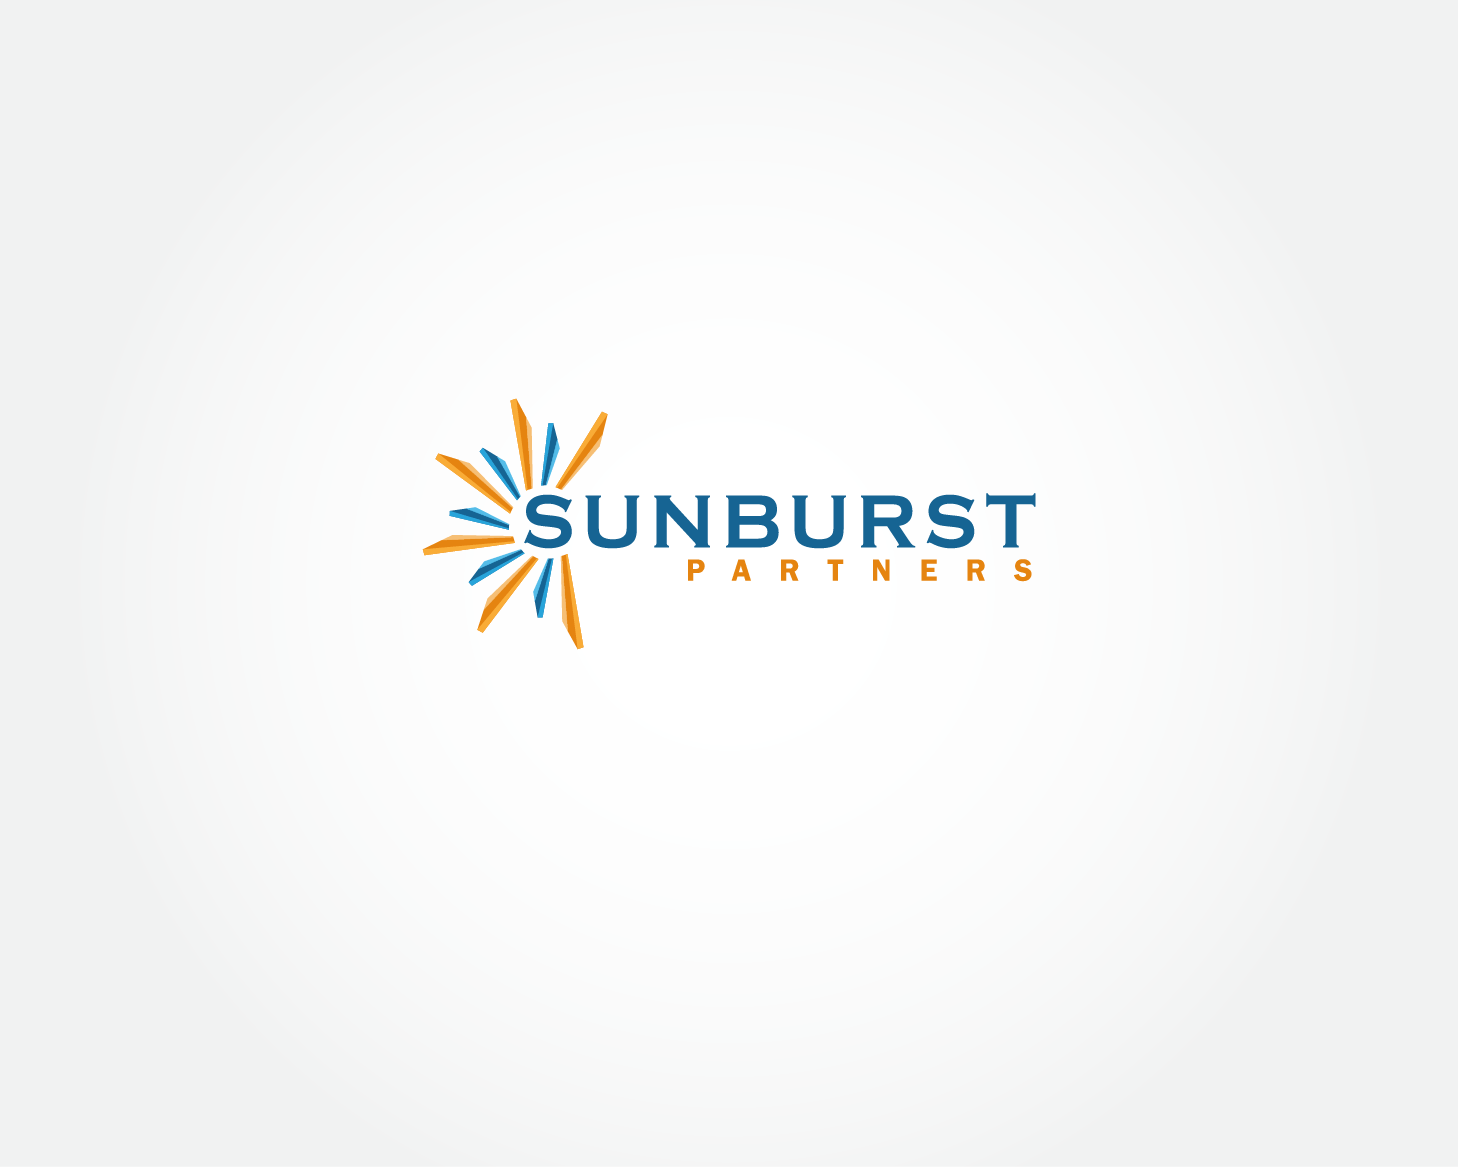 Sunburst Logo - Bold, Playful, Consulting Logo Design for Sunburst Partners